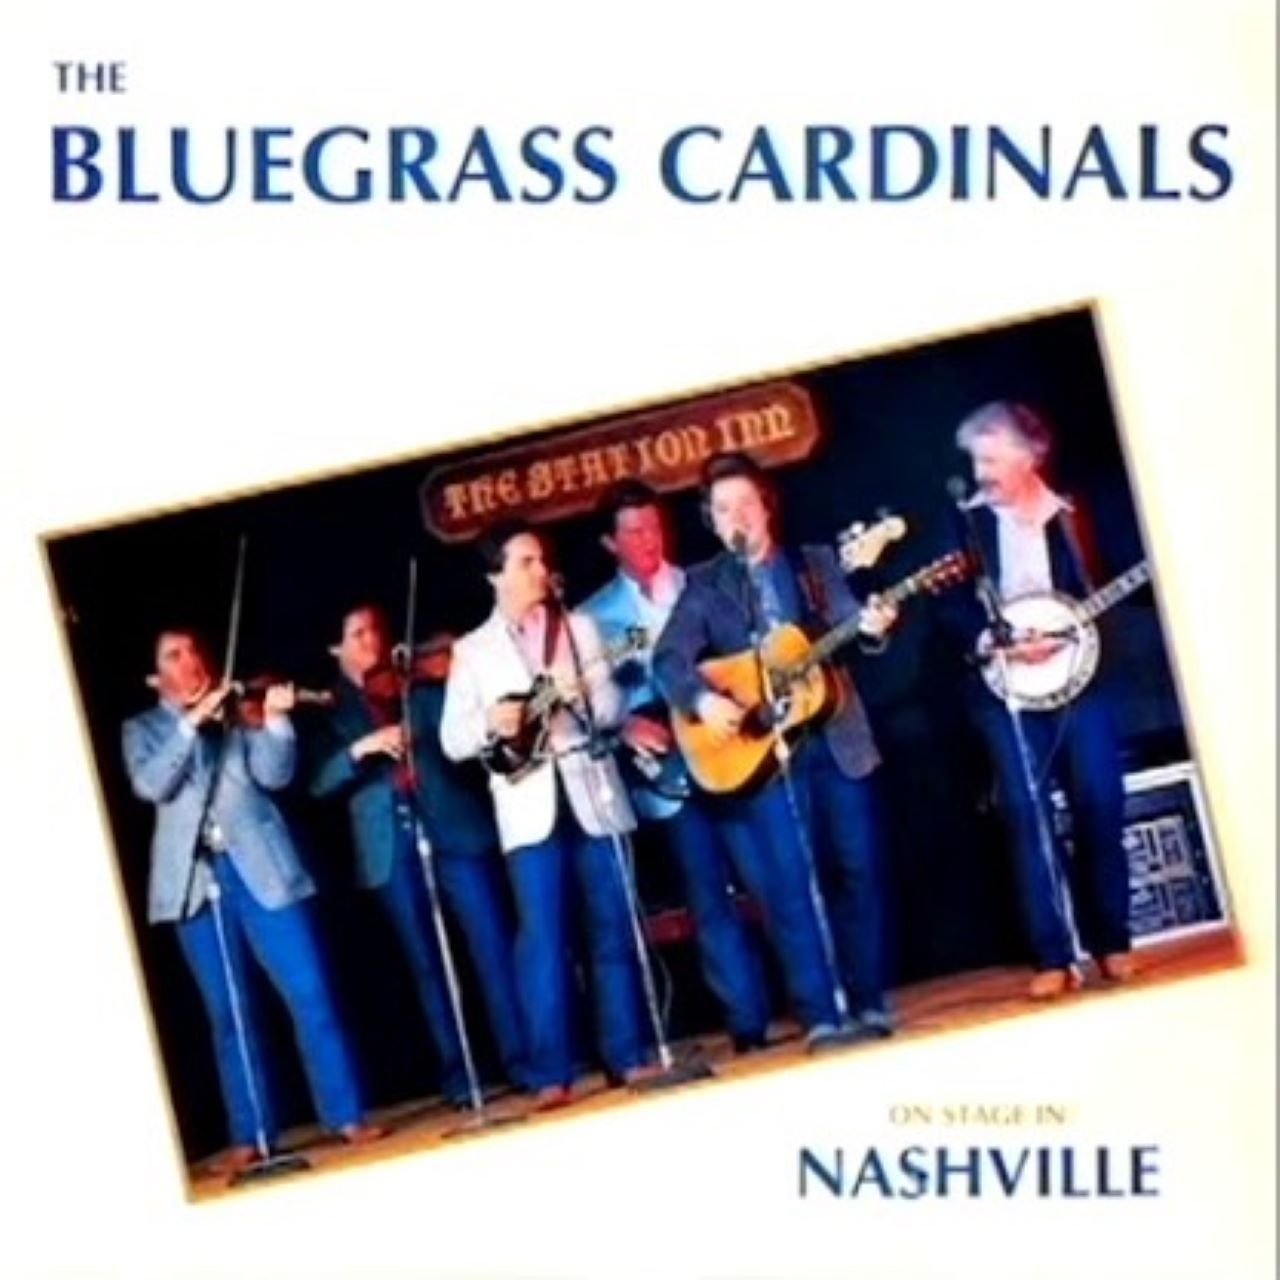 Bluegrass Cardinals - On Stage In Nashville cover album